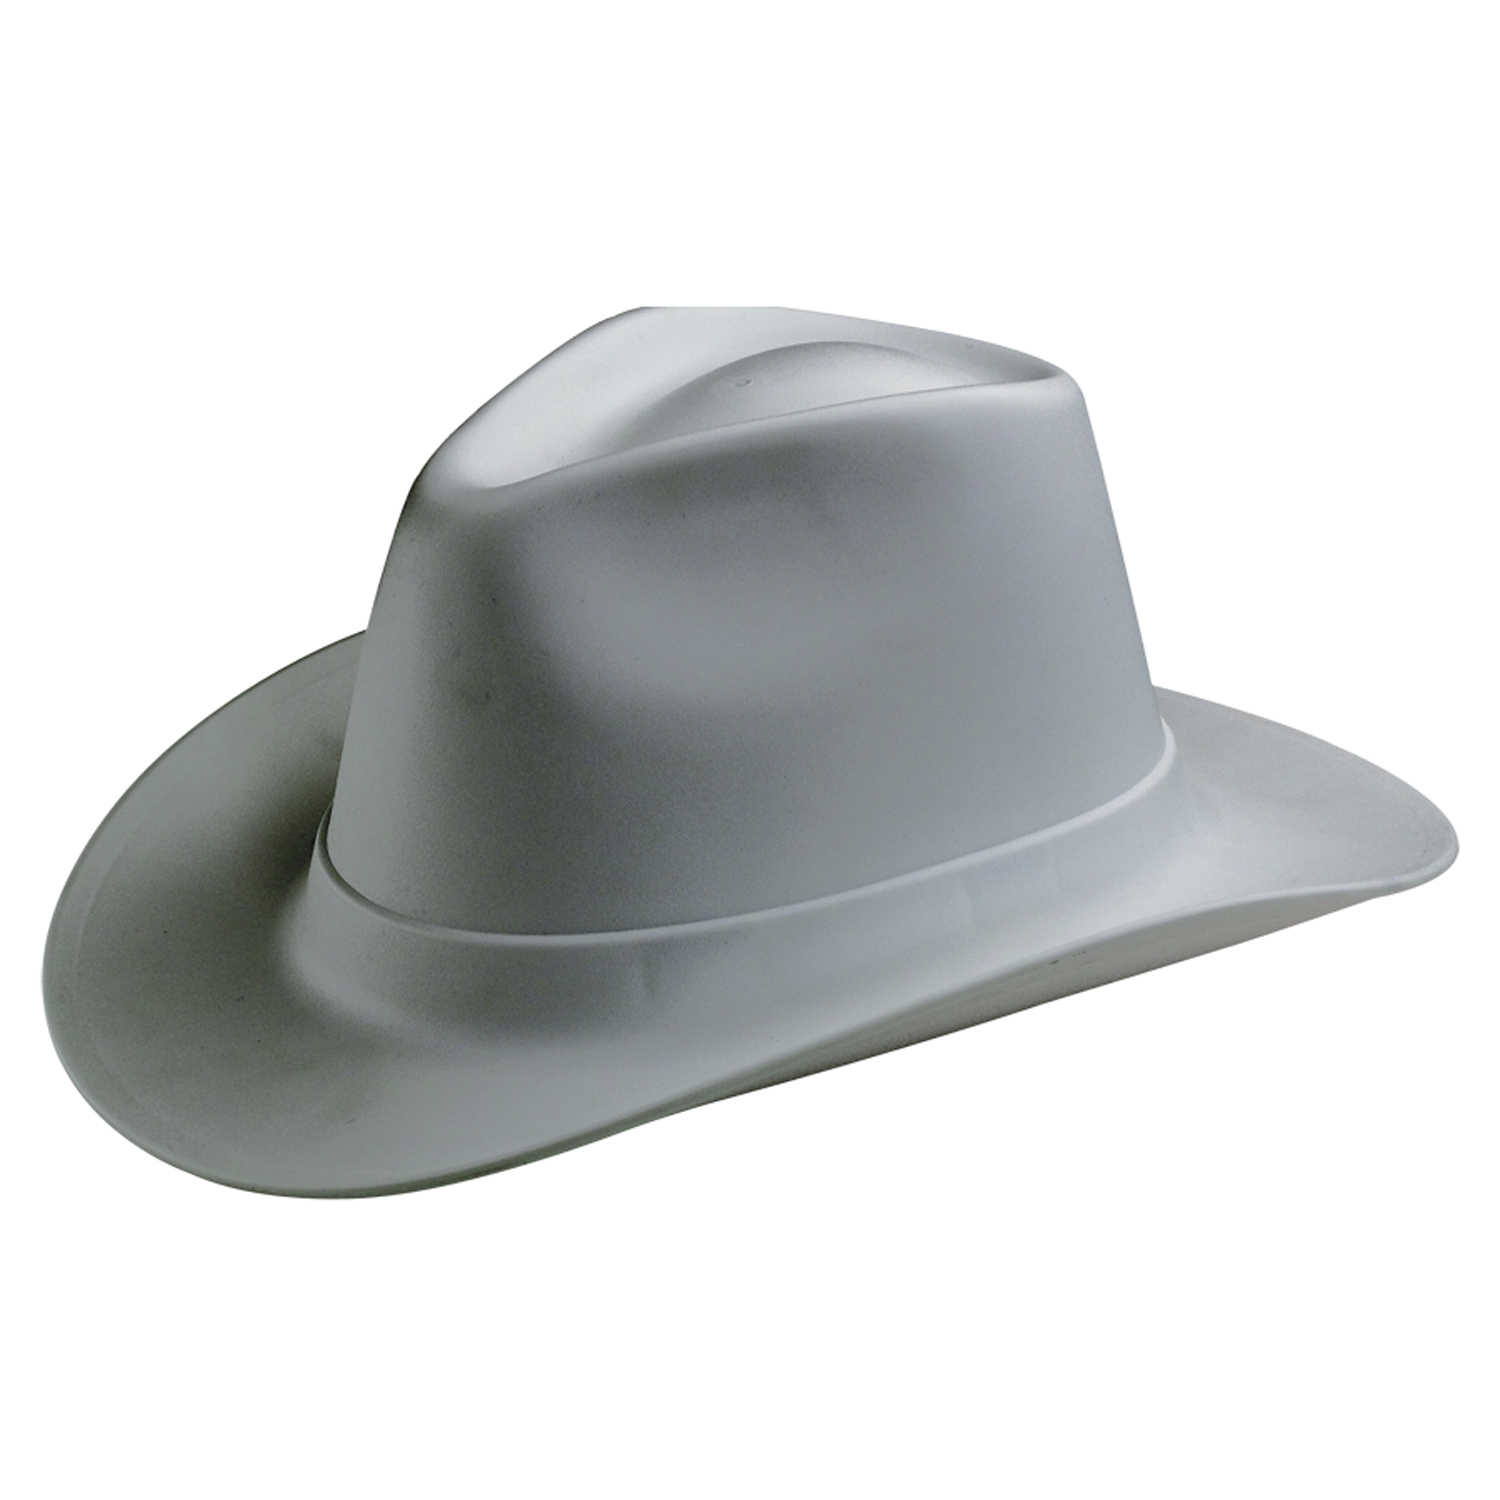 Каска ковбой. Vulcan vcb200-00 Western hard hat, Type 1, class e, Ratchet (6-point), белый. Vulcan Cowboy Style hard hat White. Vulcan каска строительная. Каска шляпа.